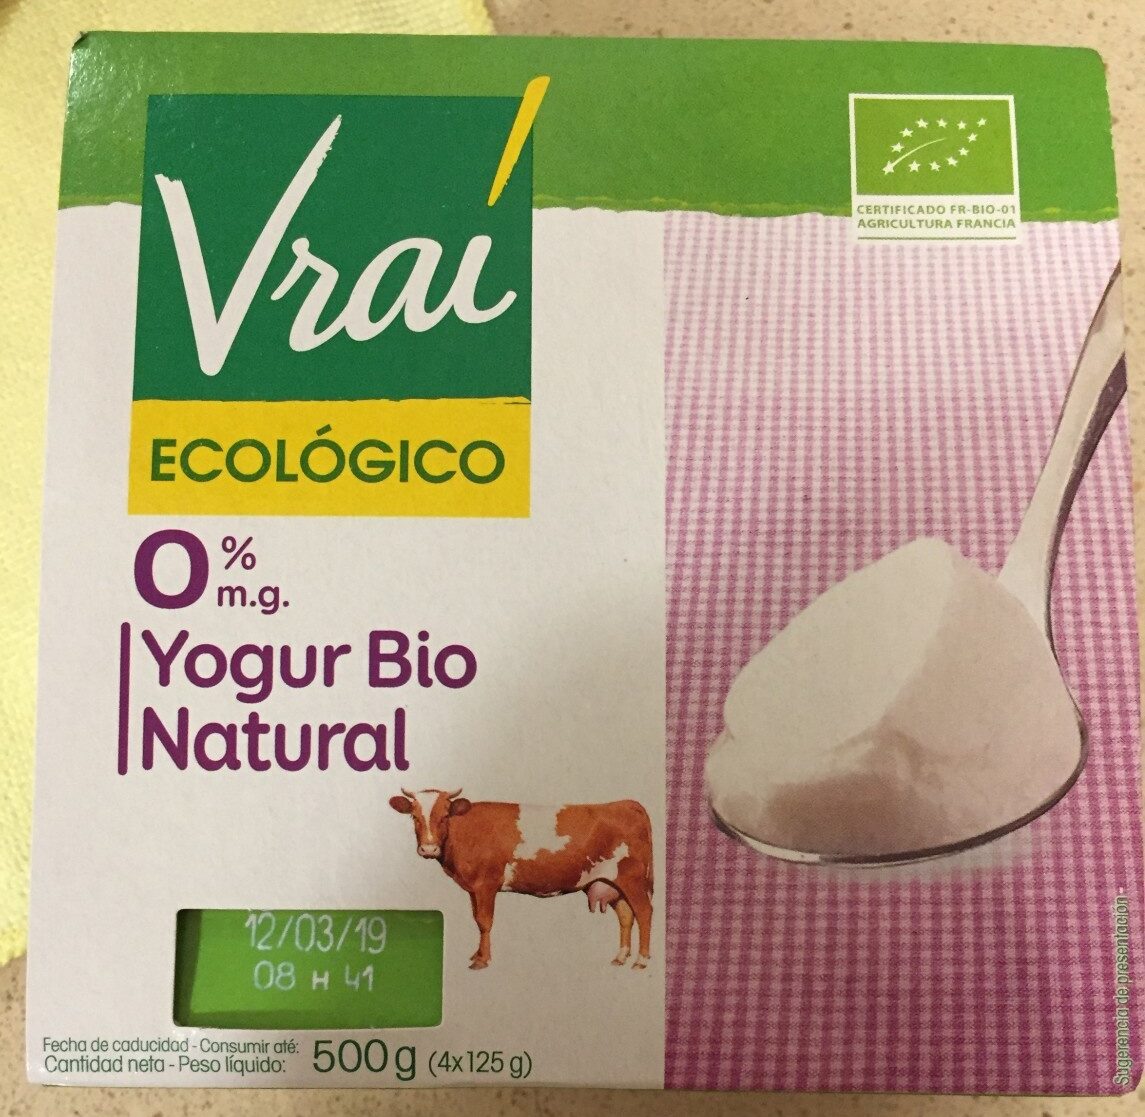 Yogur bio natural 0% - Produkt - es